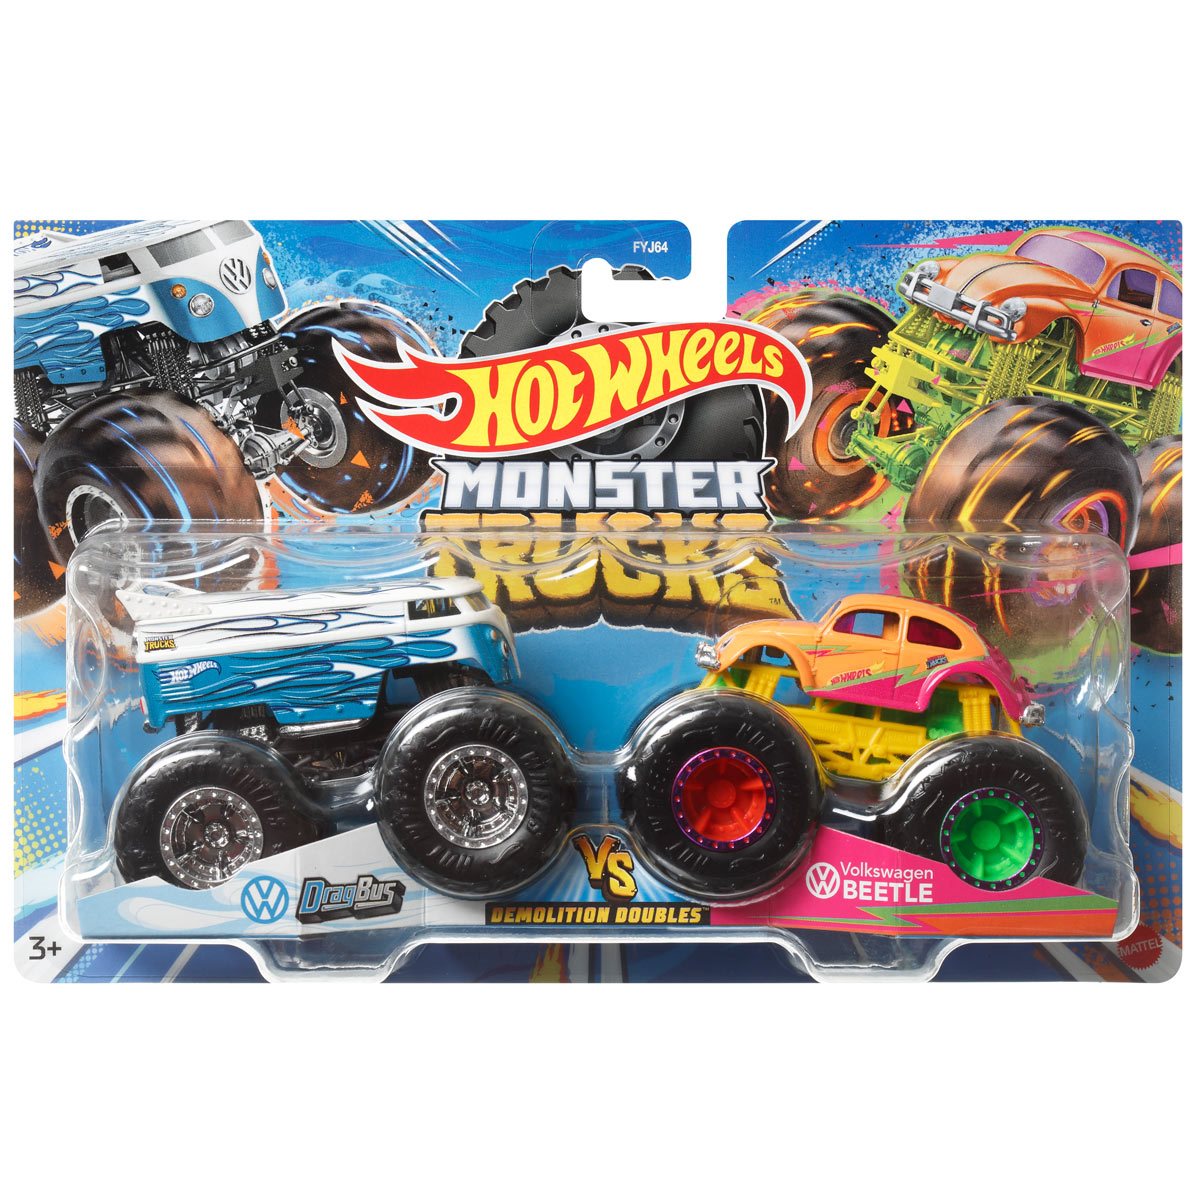 Hot Wheels Monster Trucks Silverado VS Ford Raptor Demolition Doubles